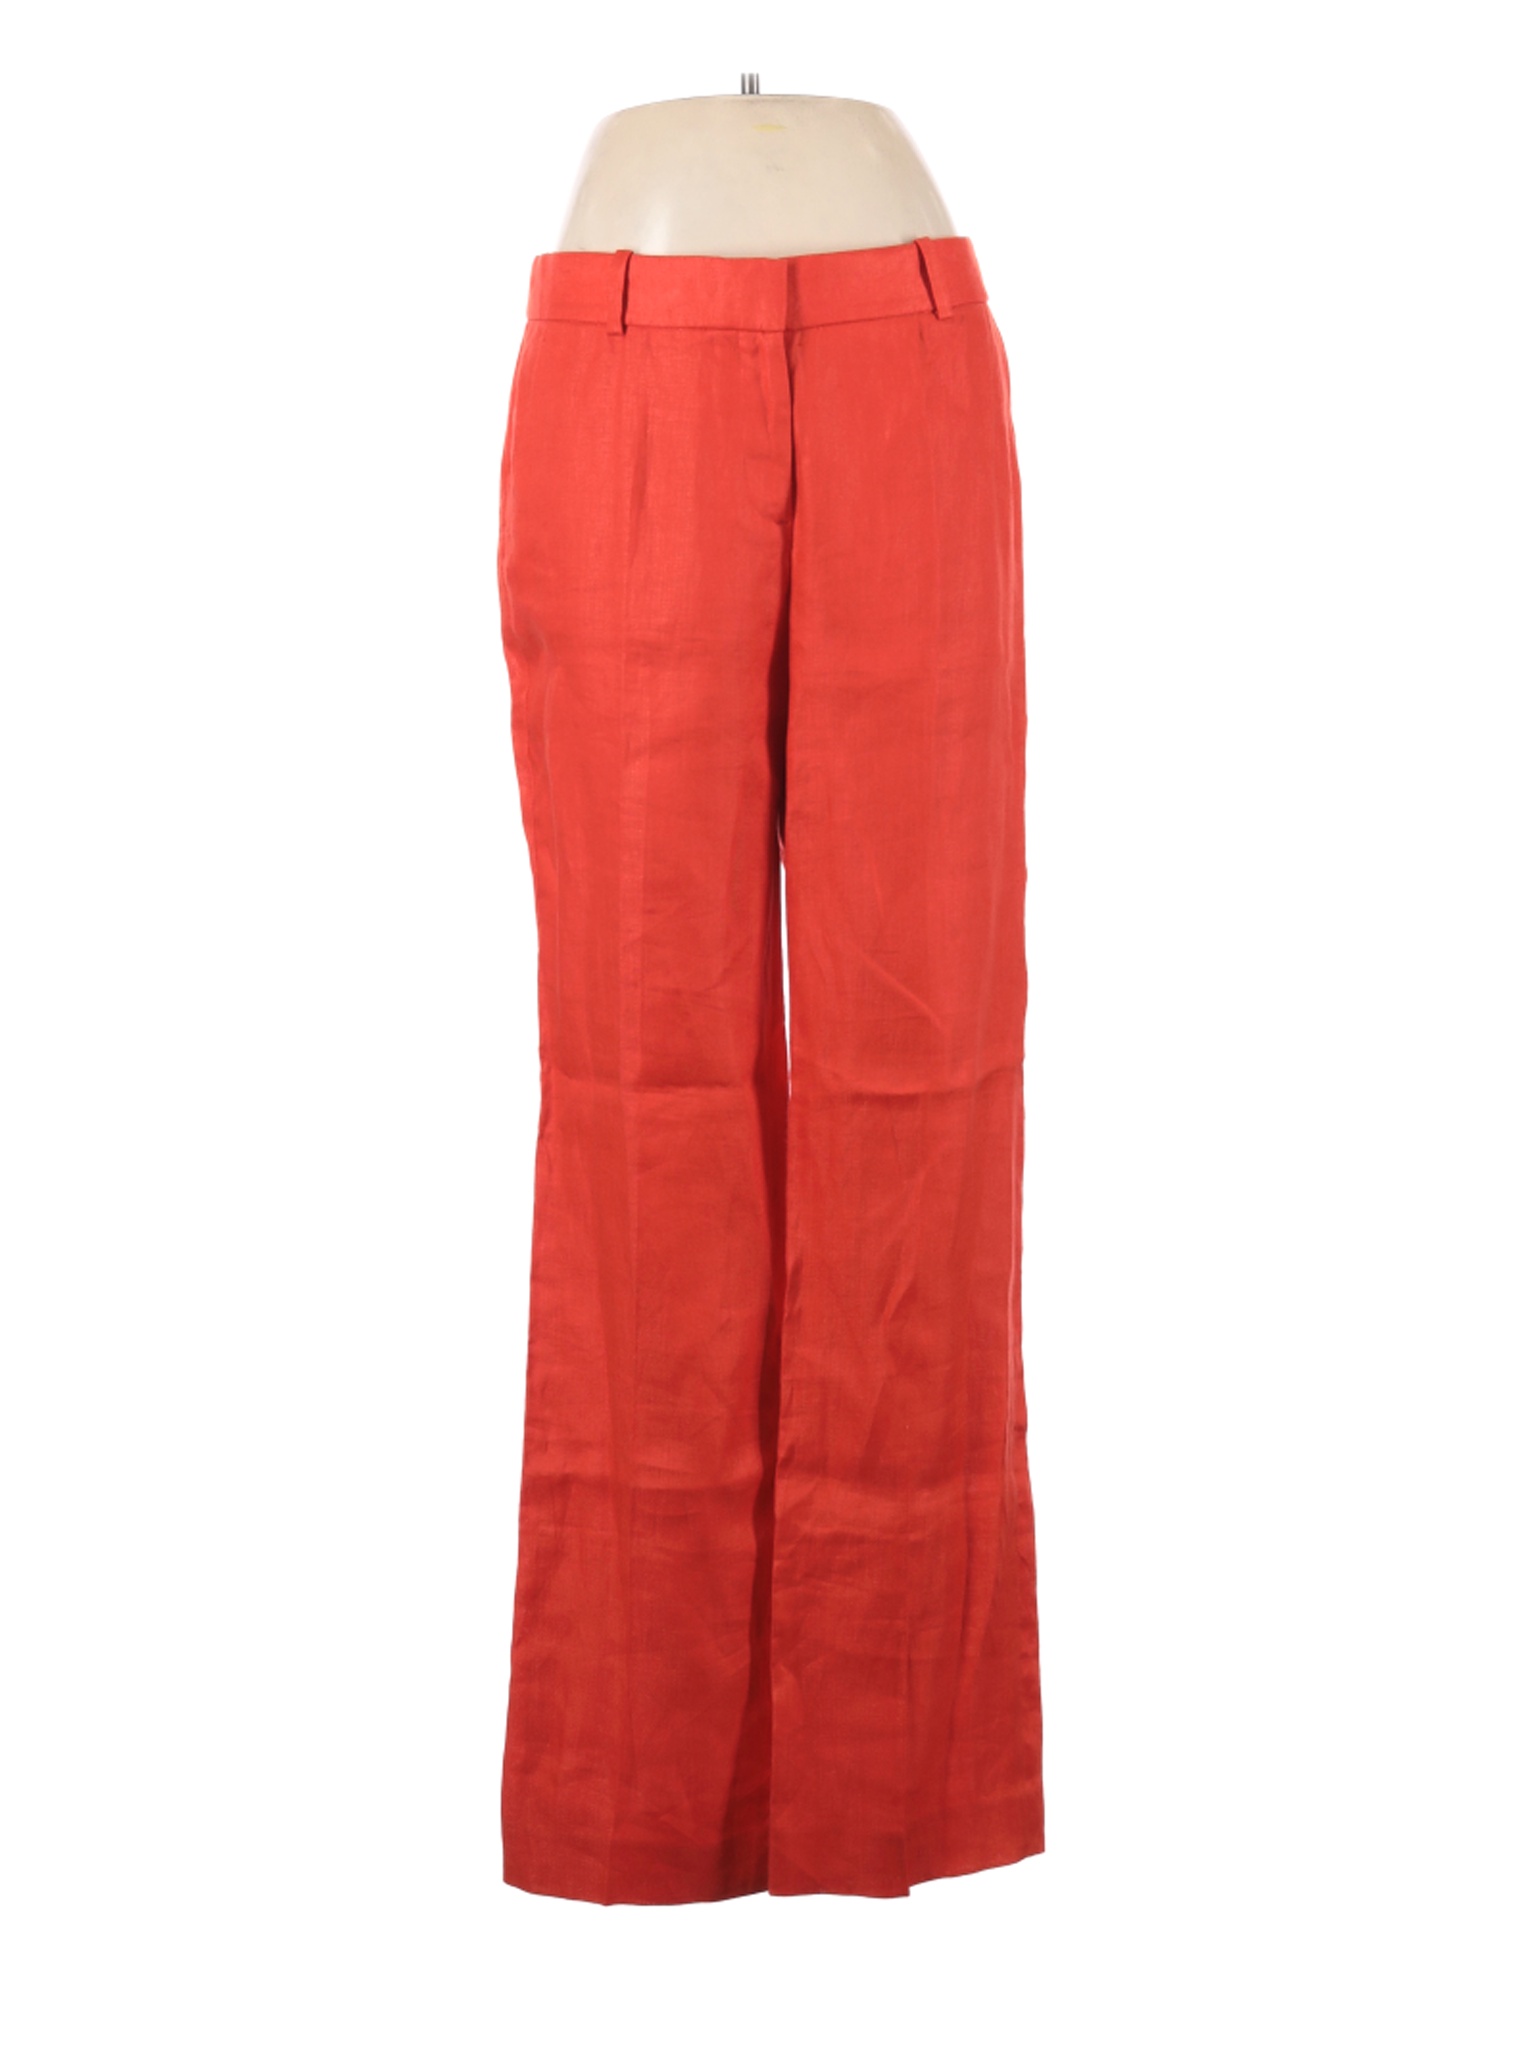 NWT J.Crew Women Orange Linen Pants 6 | eBay